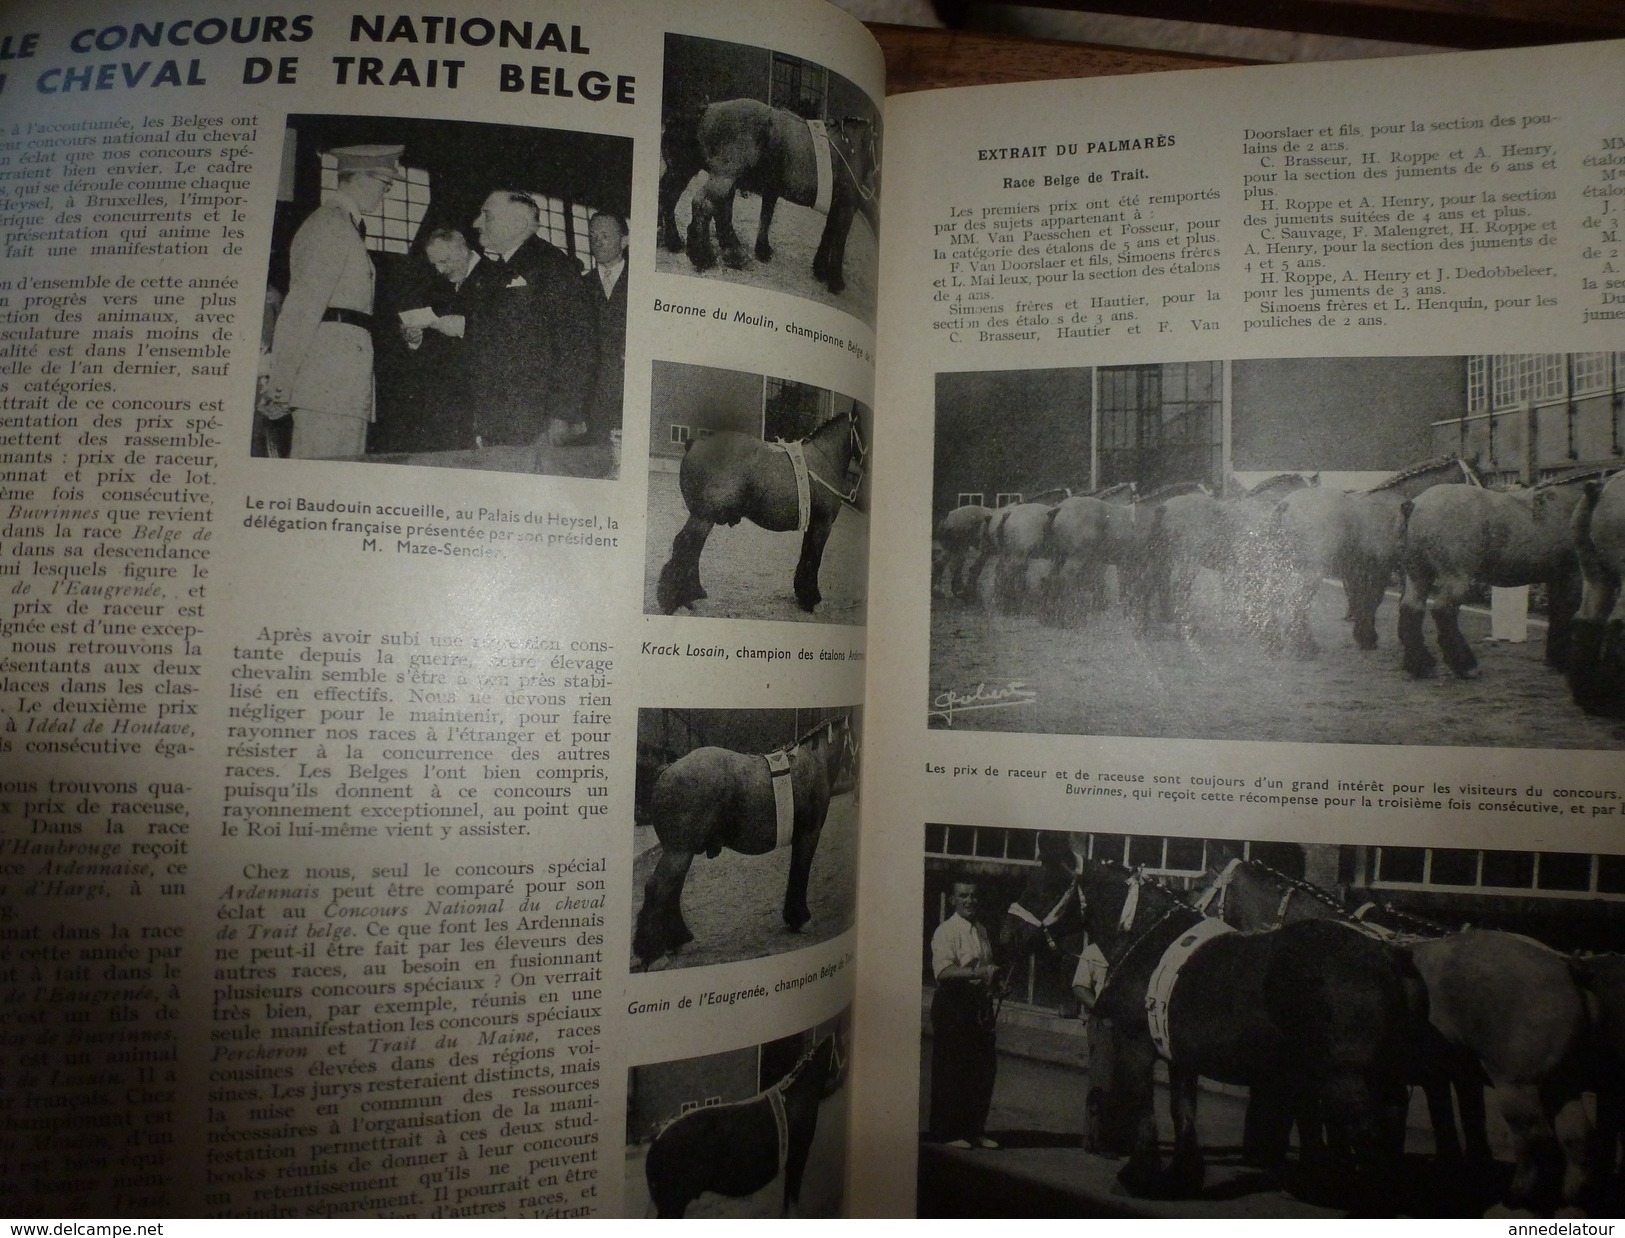 1956 LRDLE Elevage au MAROC; En Hollande;Recalcifier la terre;Pâturage ; Les conseils; etc